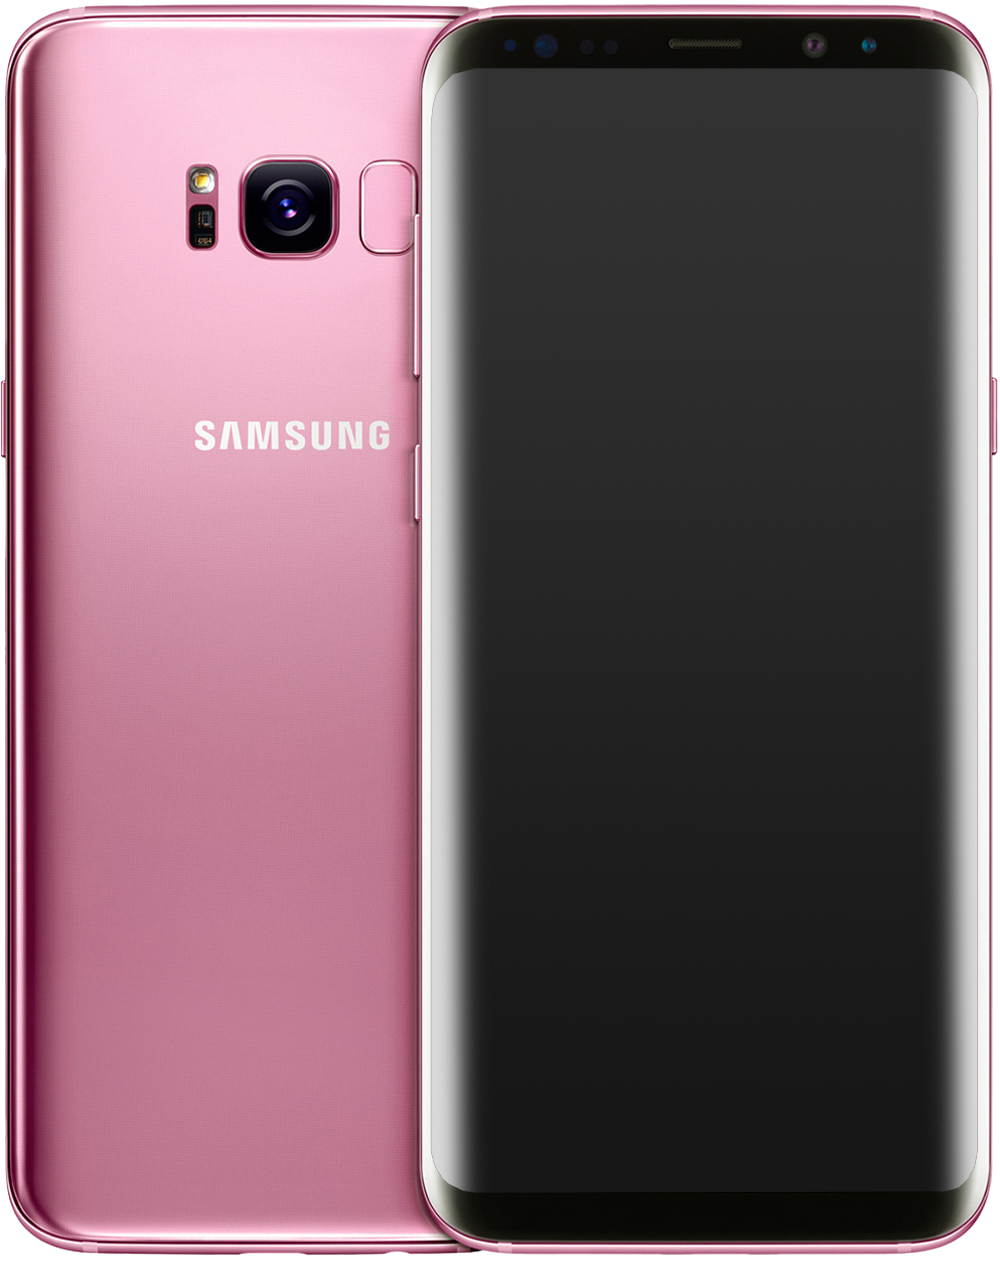 Samsung Galaxy S8 Dual-SIM pink - Ohne Vertrag